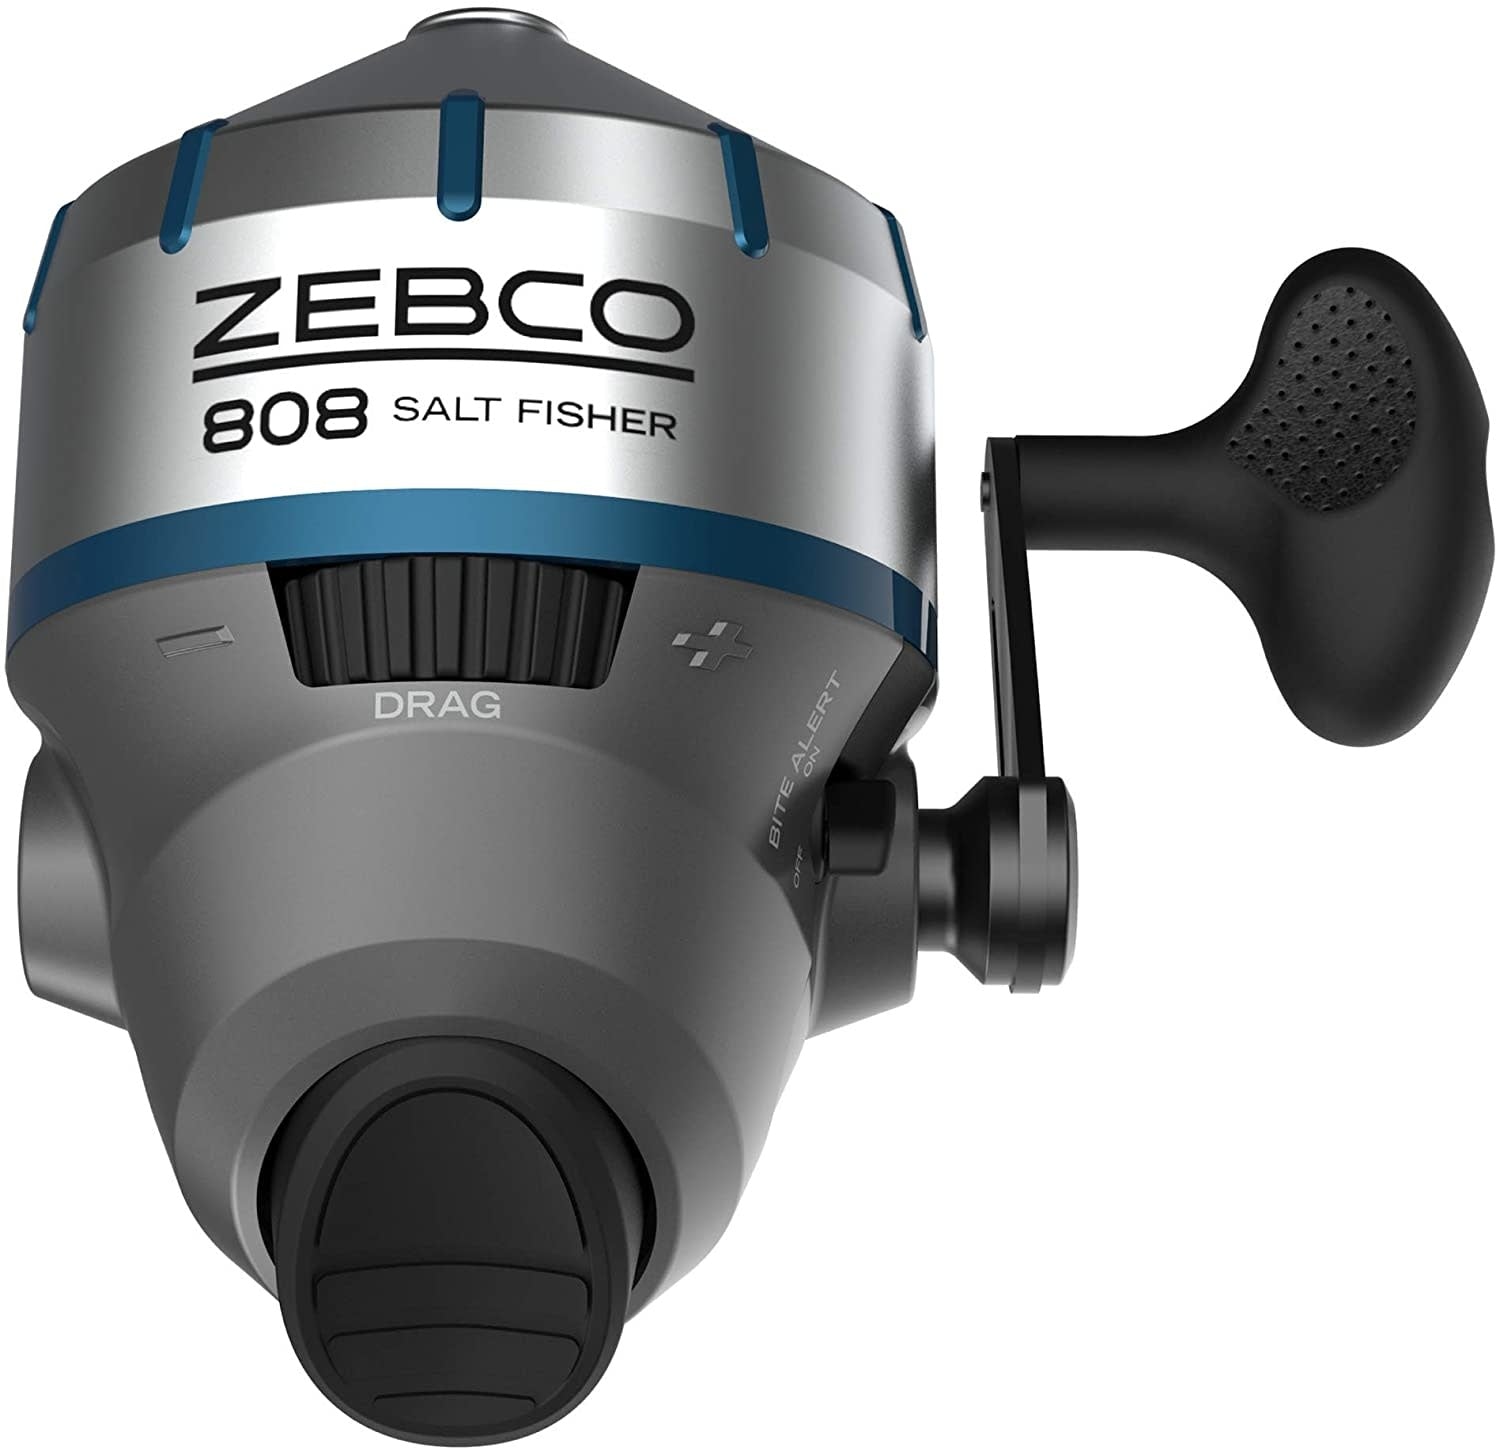 Zebco Saltwater Spincast Reel - 808 - Hamilton Bait and Tackle